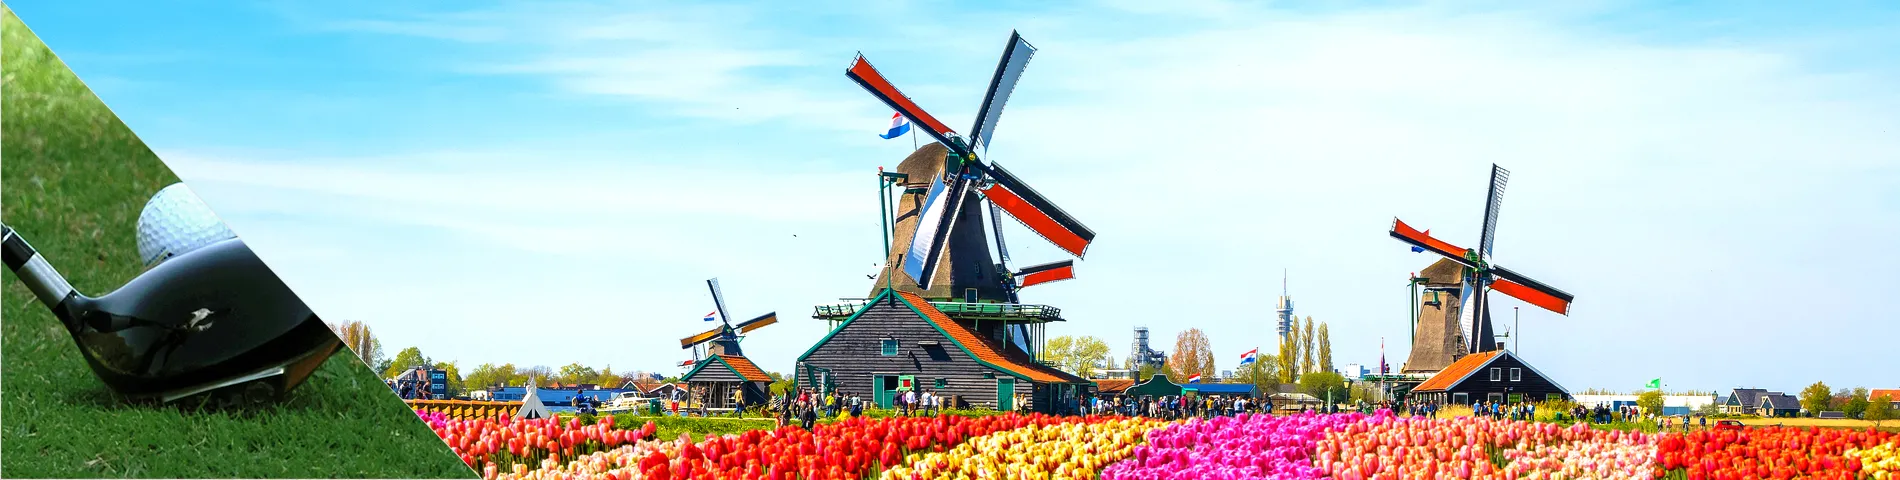 Nederland - 